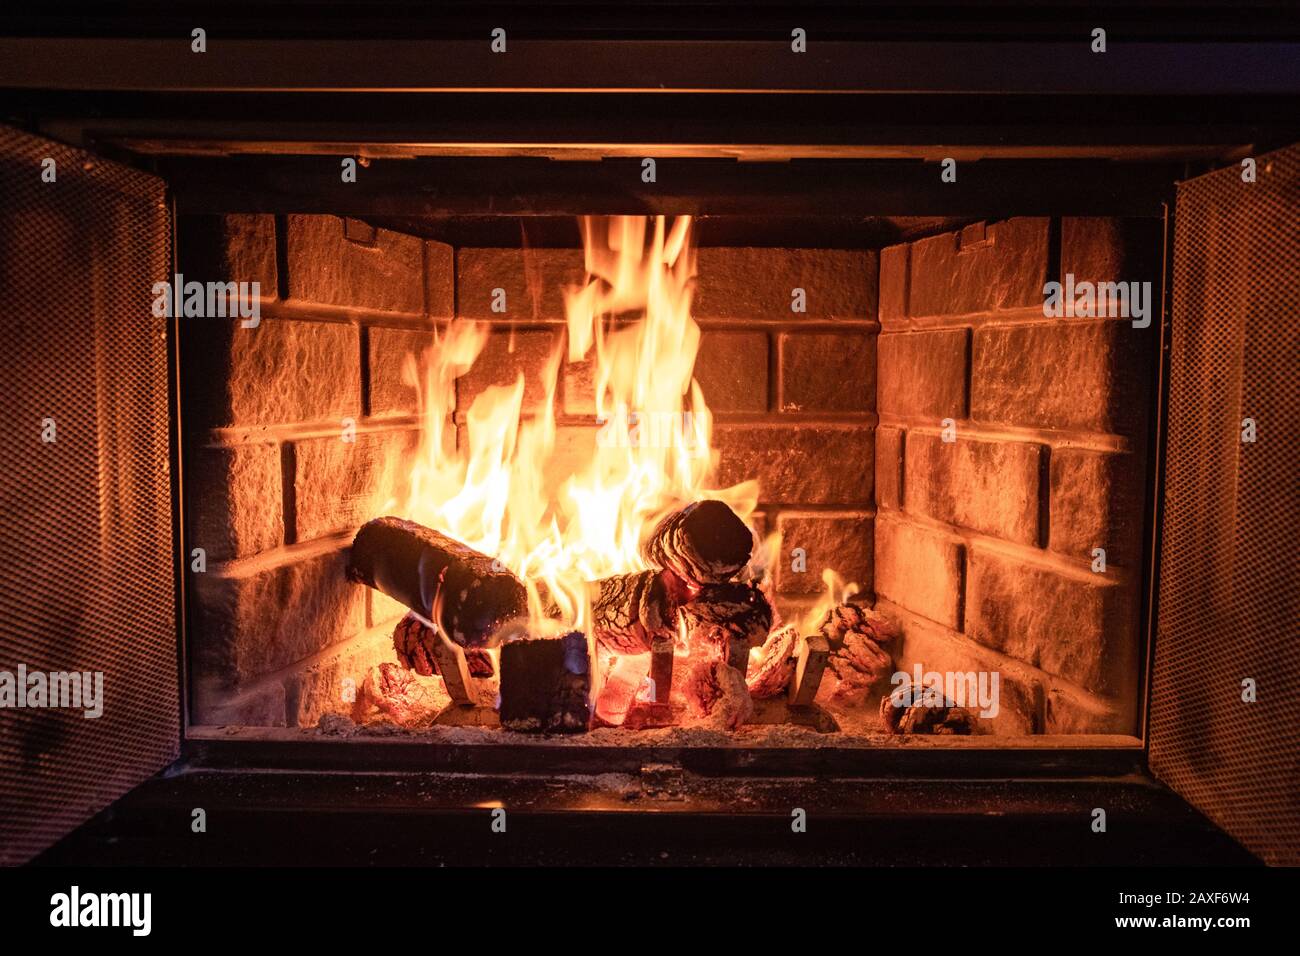 Closeup shot of a fire in a brick fireplace Stock Photo